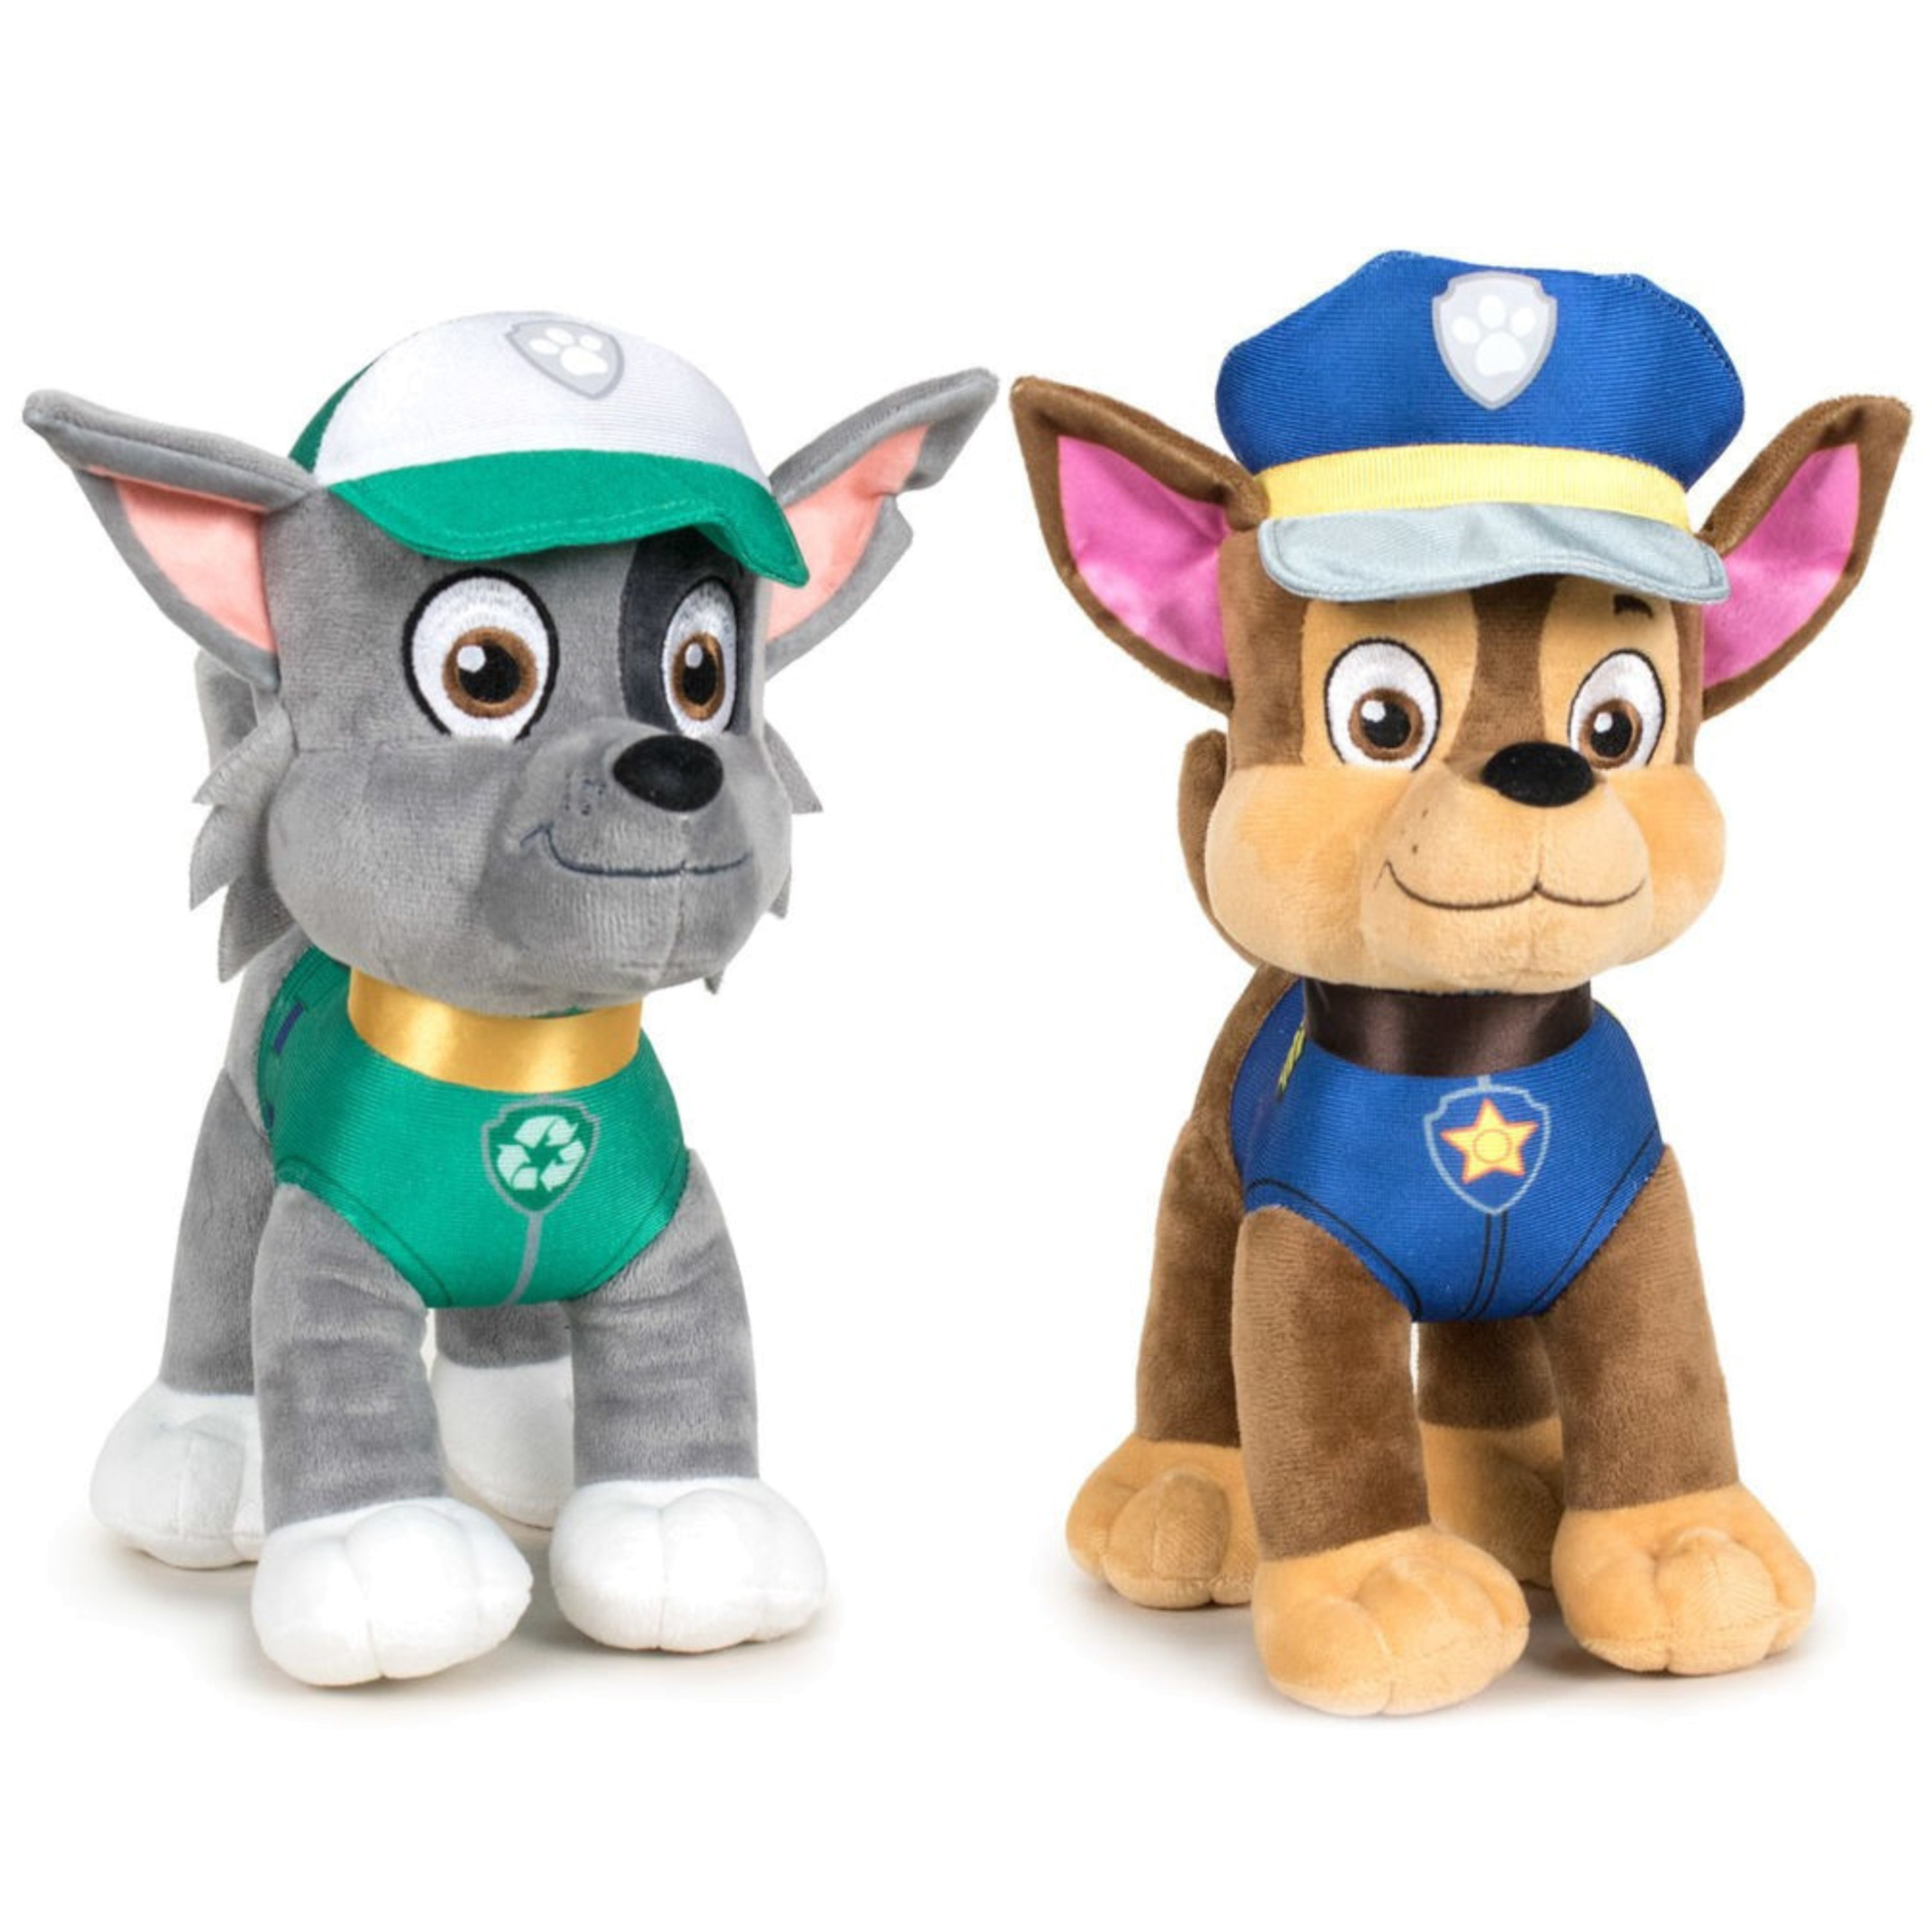 Paw Patrol figuren speelgoed knuffels set van 2x karakters Rocky en Chase 19 cm